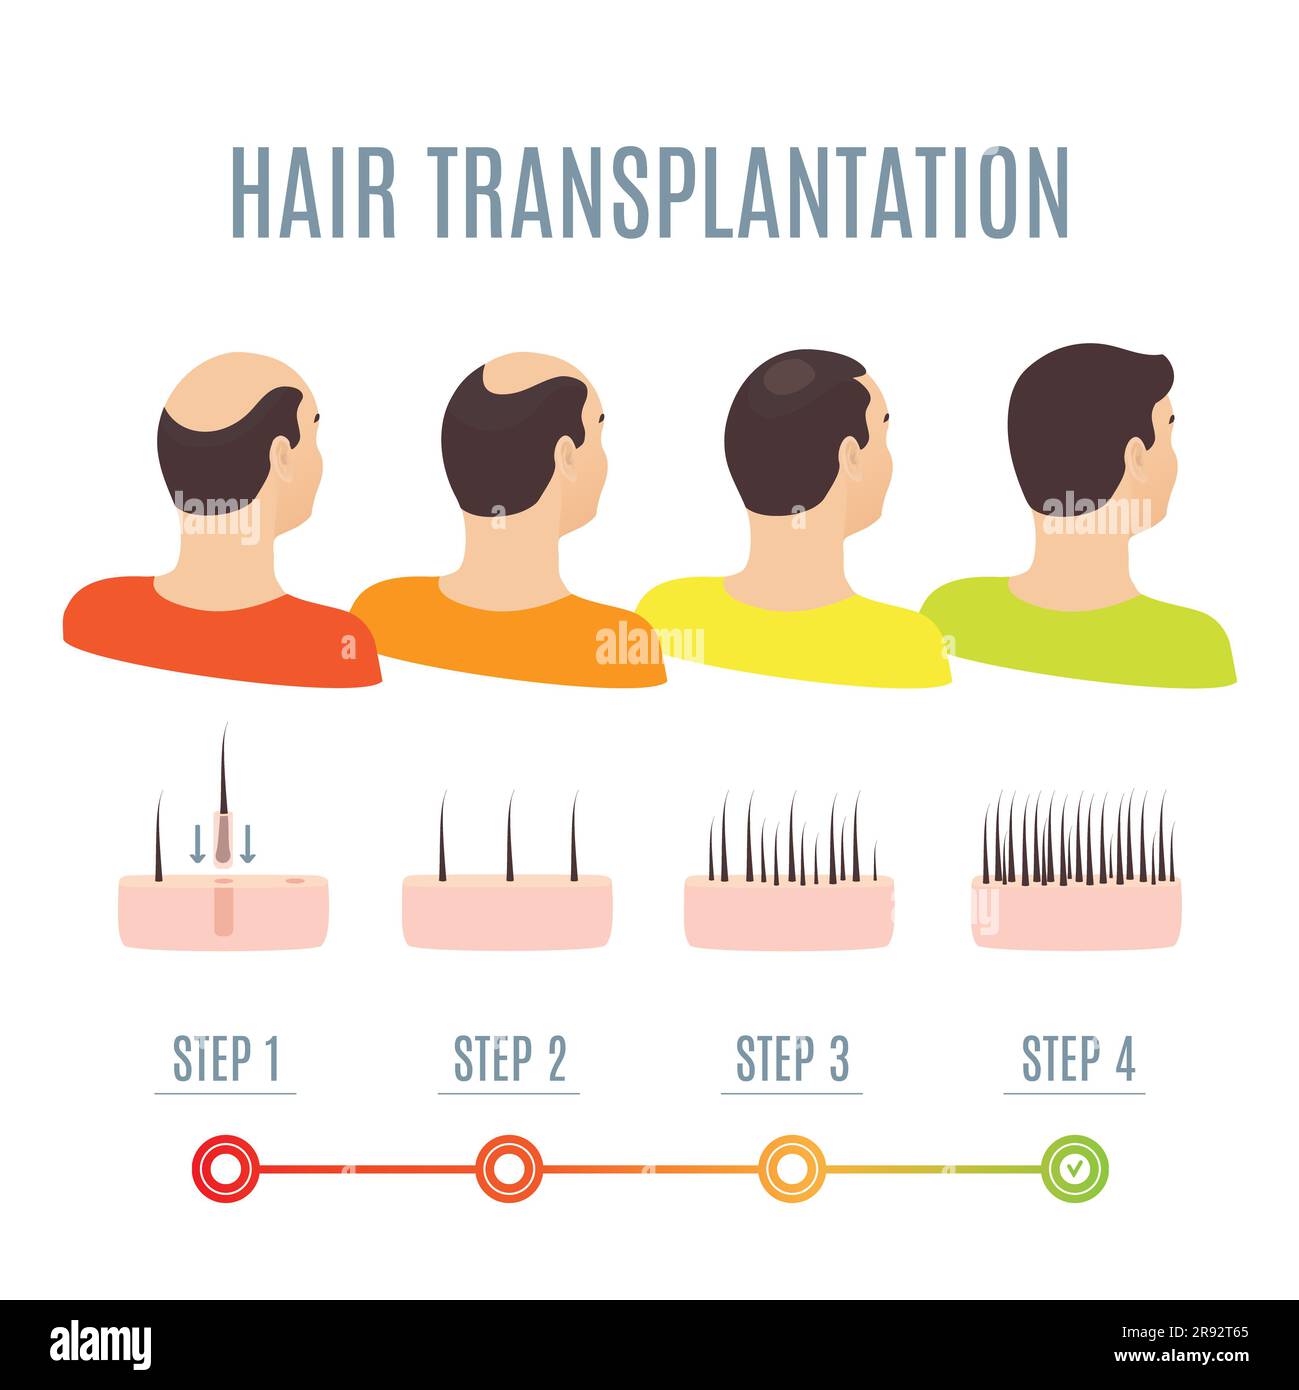 Hair transplantation, illustration Stock Photo